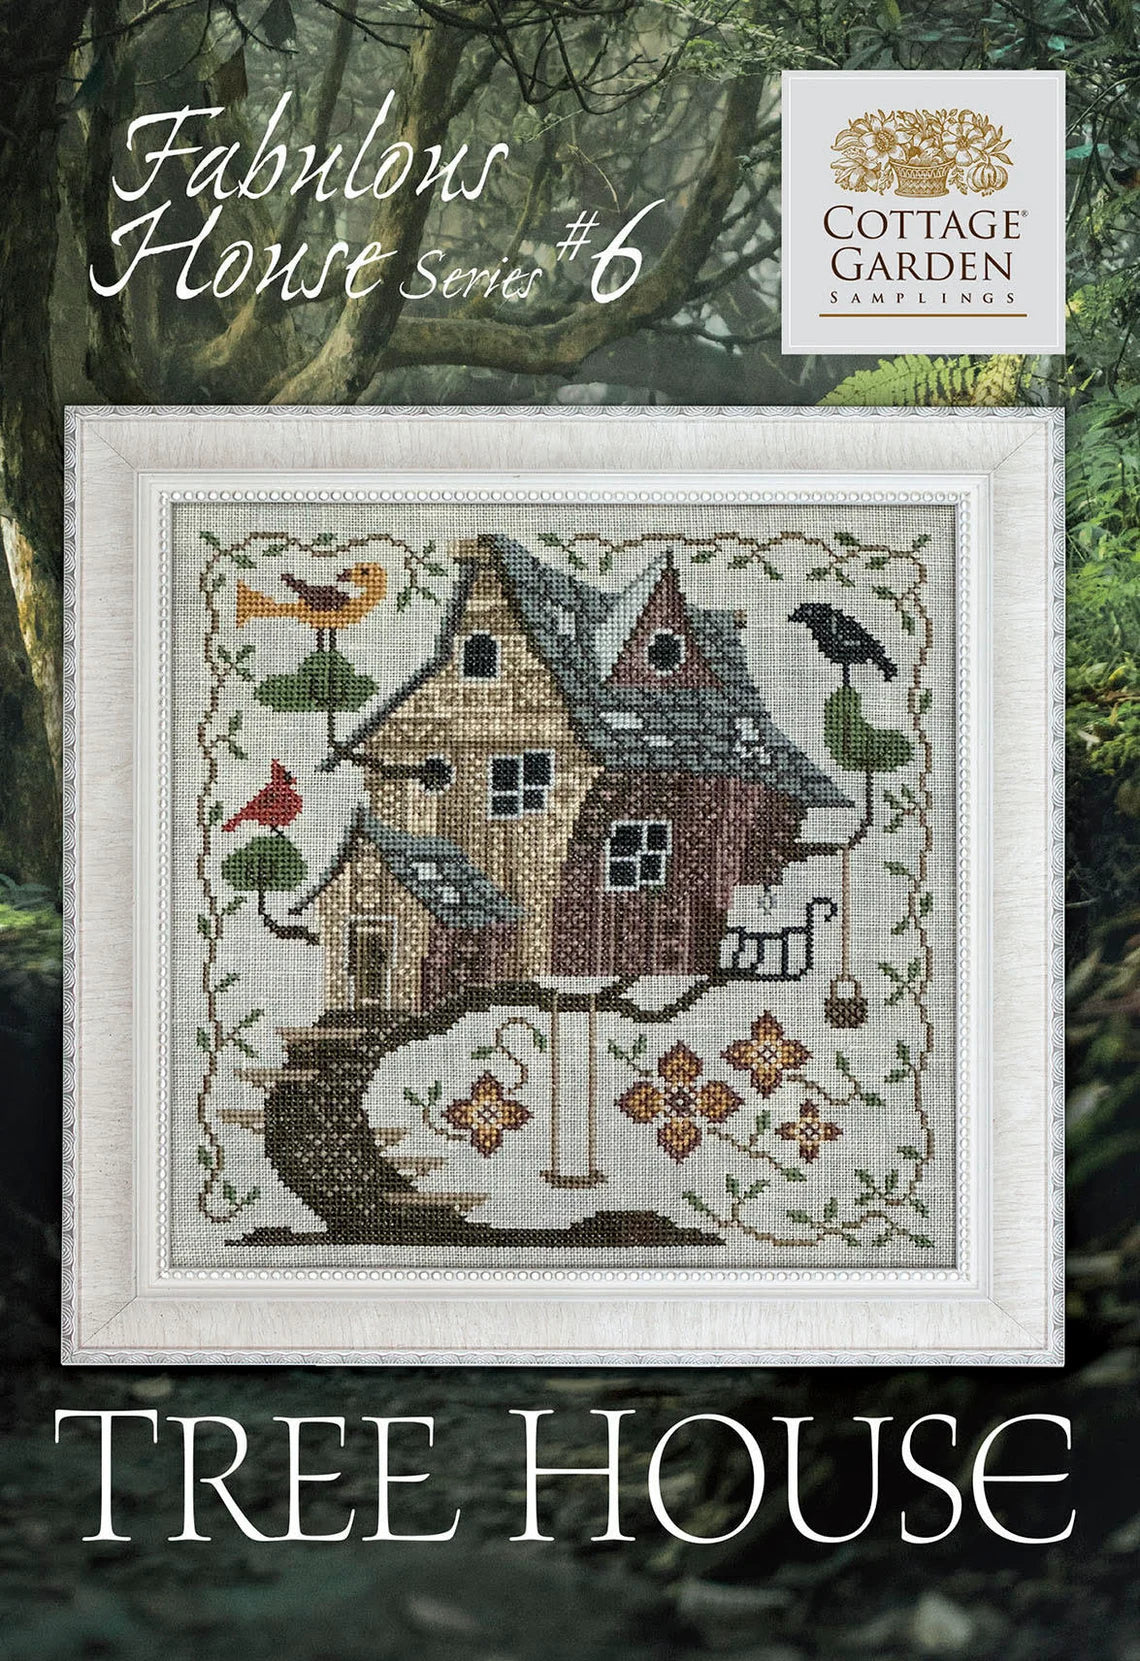 Fabulous House #6 Tree House by Cottage Garden Samplings Cross Stitch Pattern